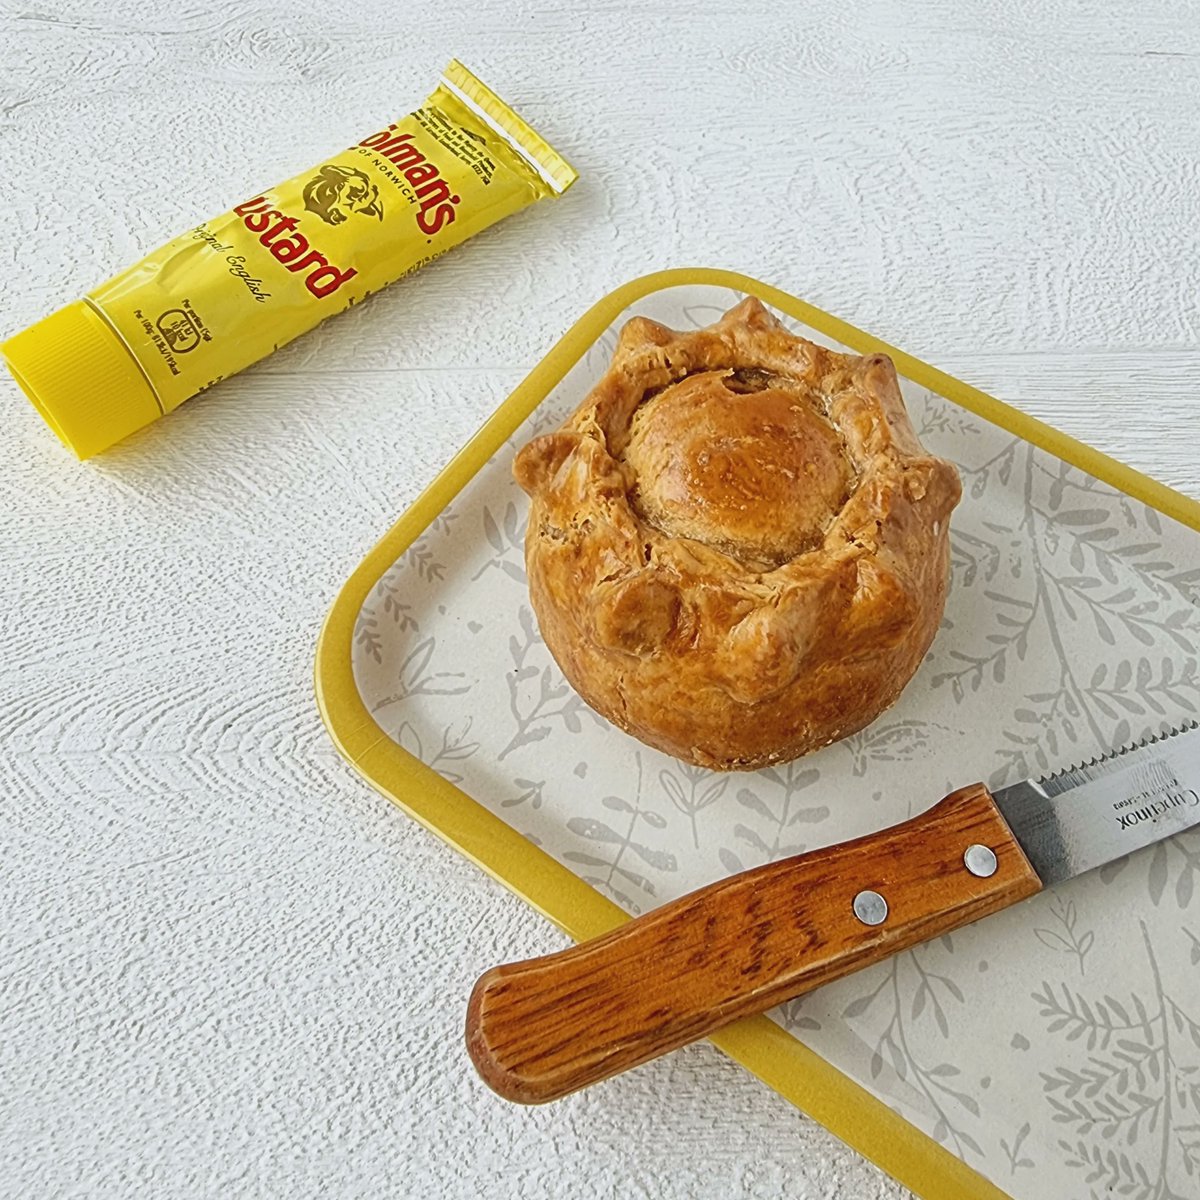 Mustard with your pork pie?😋
 #traditional #porkpies #delicious #pielovers #foodphotography #instafoodie #foodlover #fyp #foodie #comfortfood #mustard #blackcountry #original #explorepage #wholesale #deli #piemarket